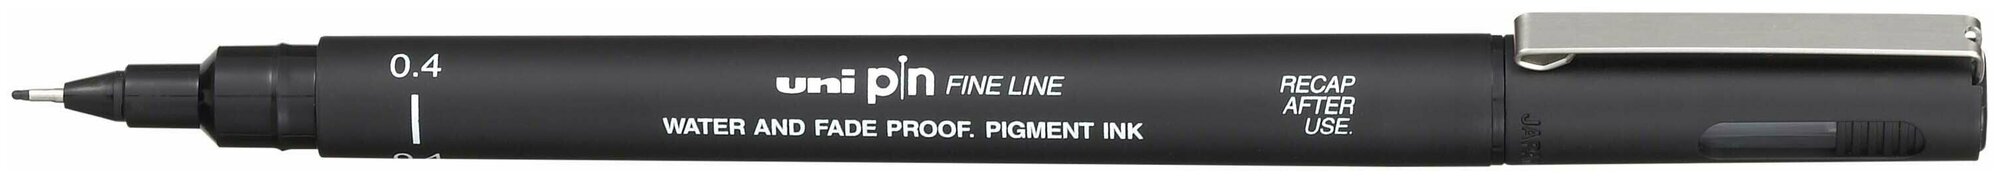 Линер PIN 04 - 200(S), чёрный, 0.4 мм